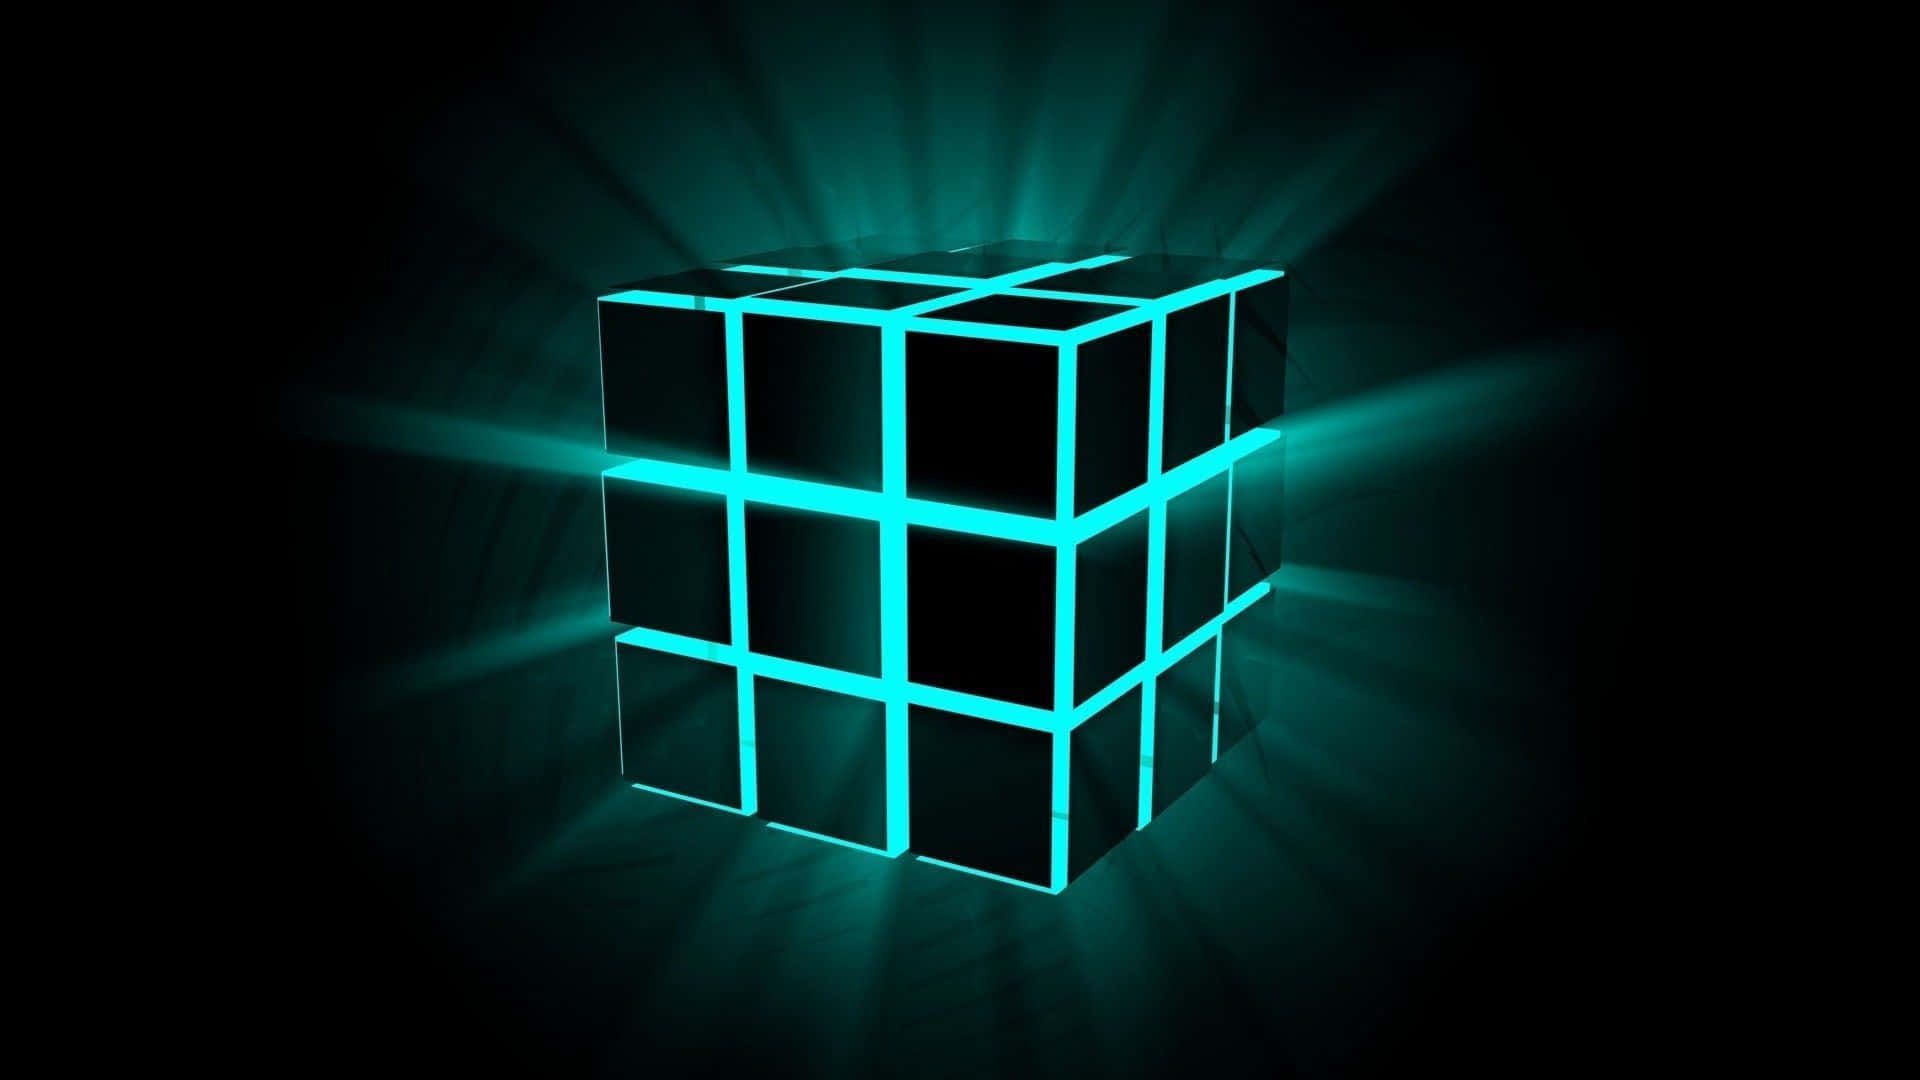 Neon Glow Cube Illustration Wallpaper